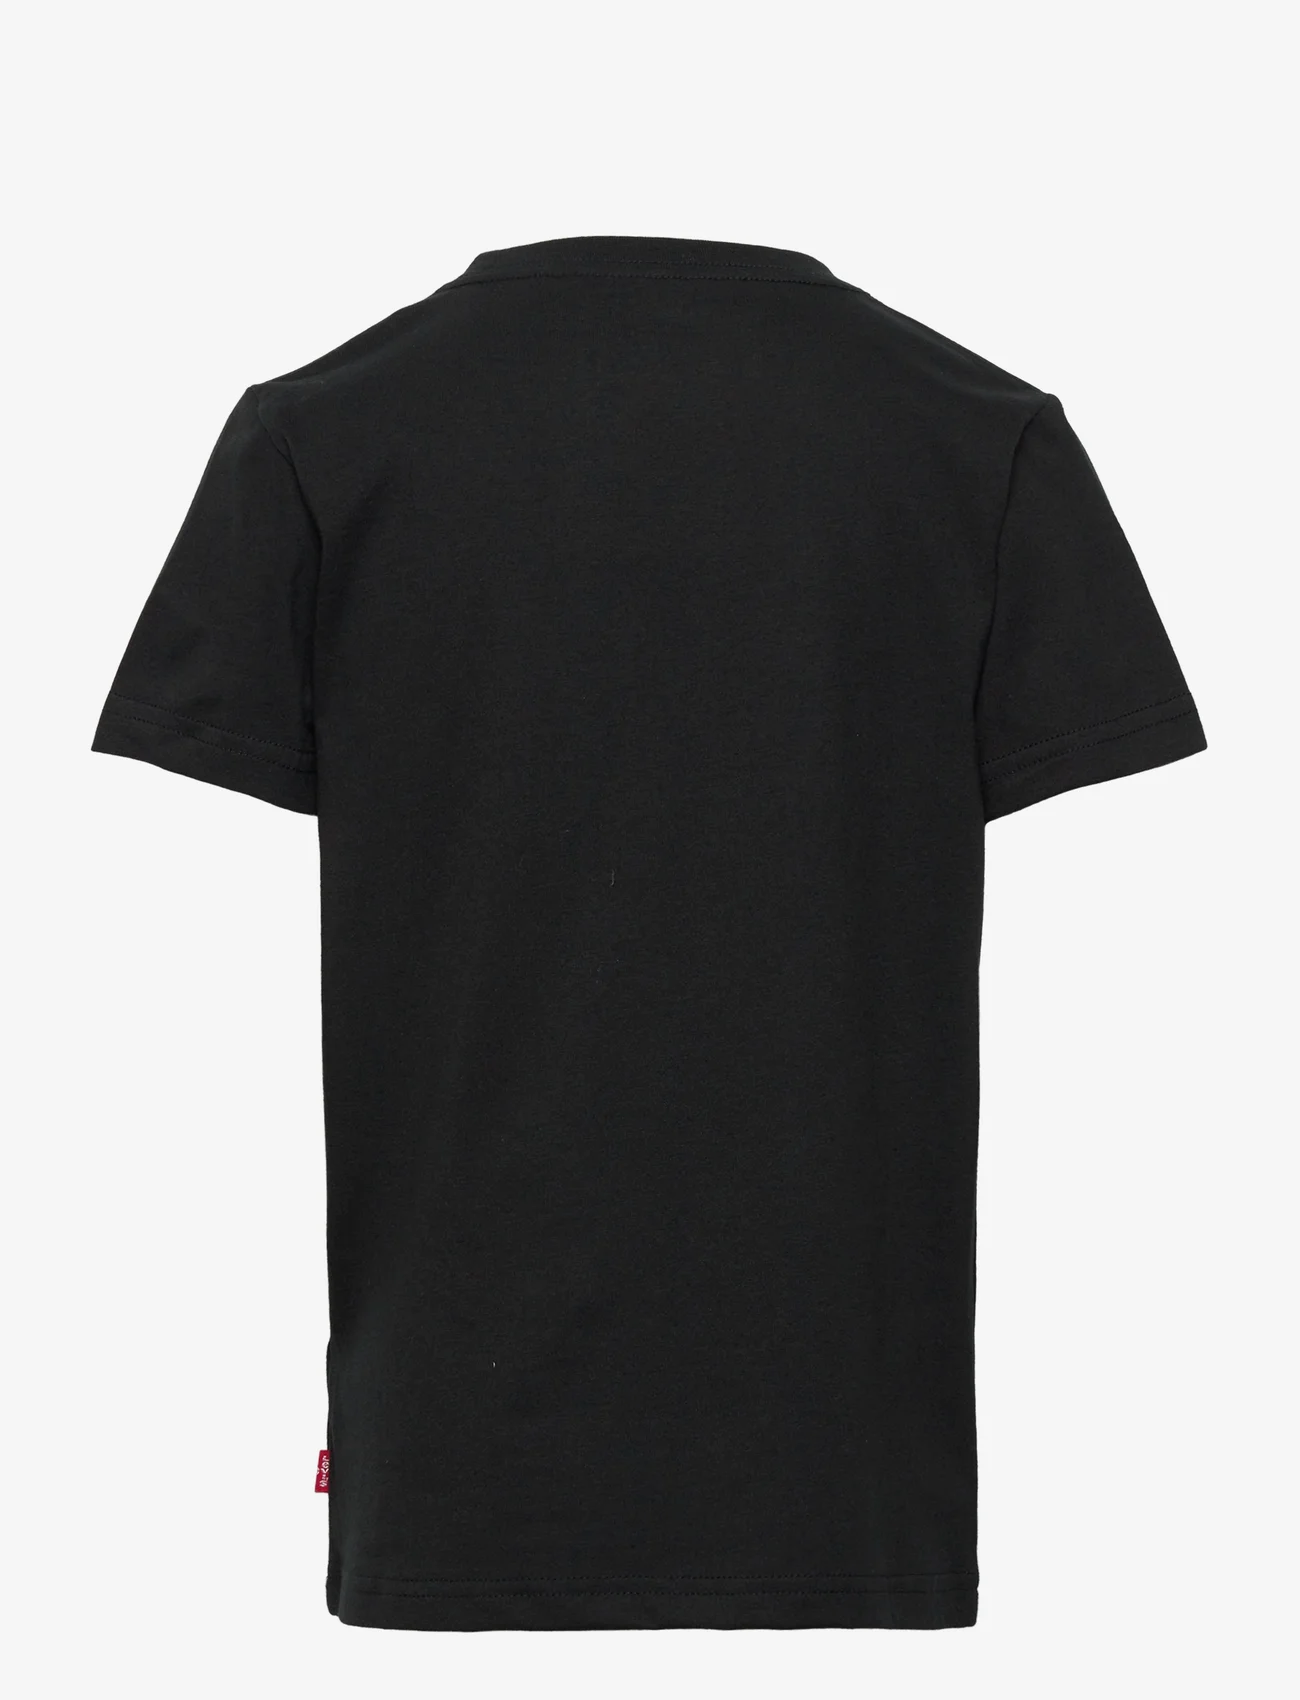 Levi's - Levi's® 501 Original Tee - marškinėliai trumpomis rankovėmis - black - 1